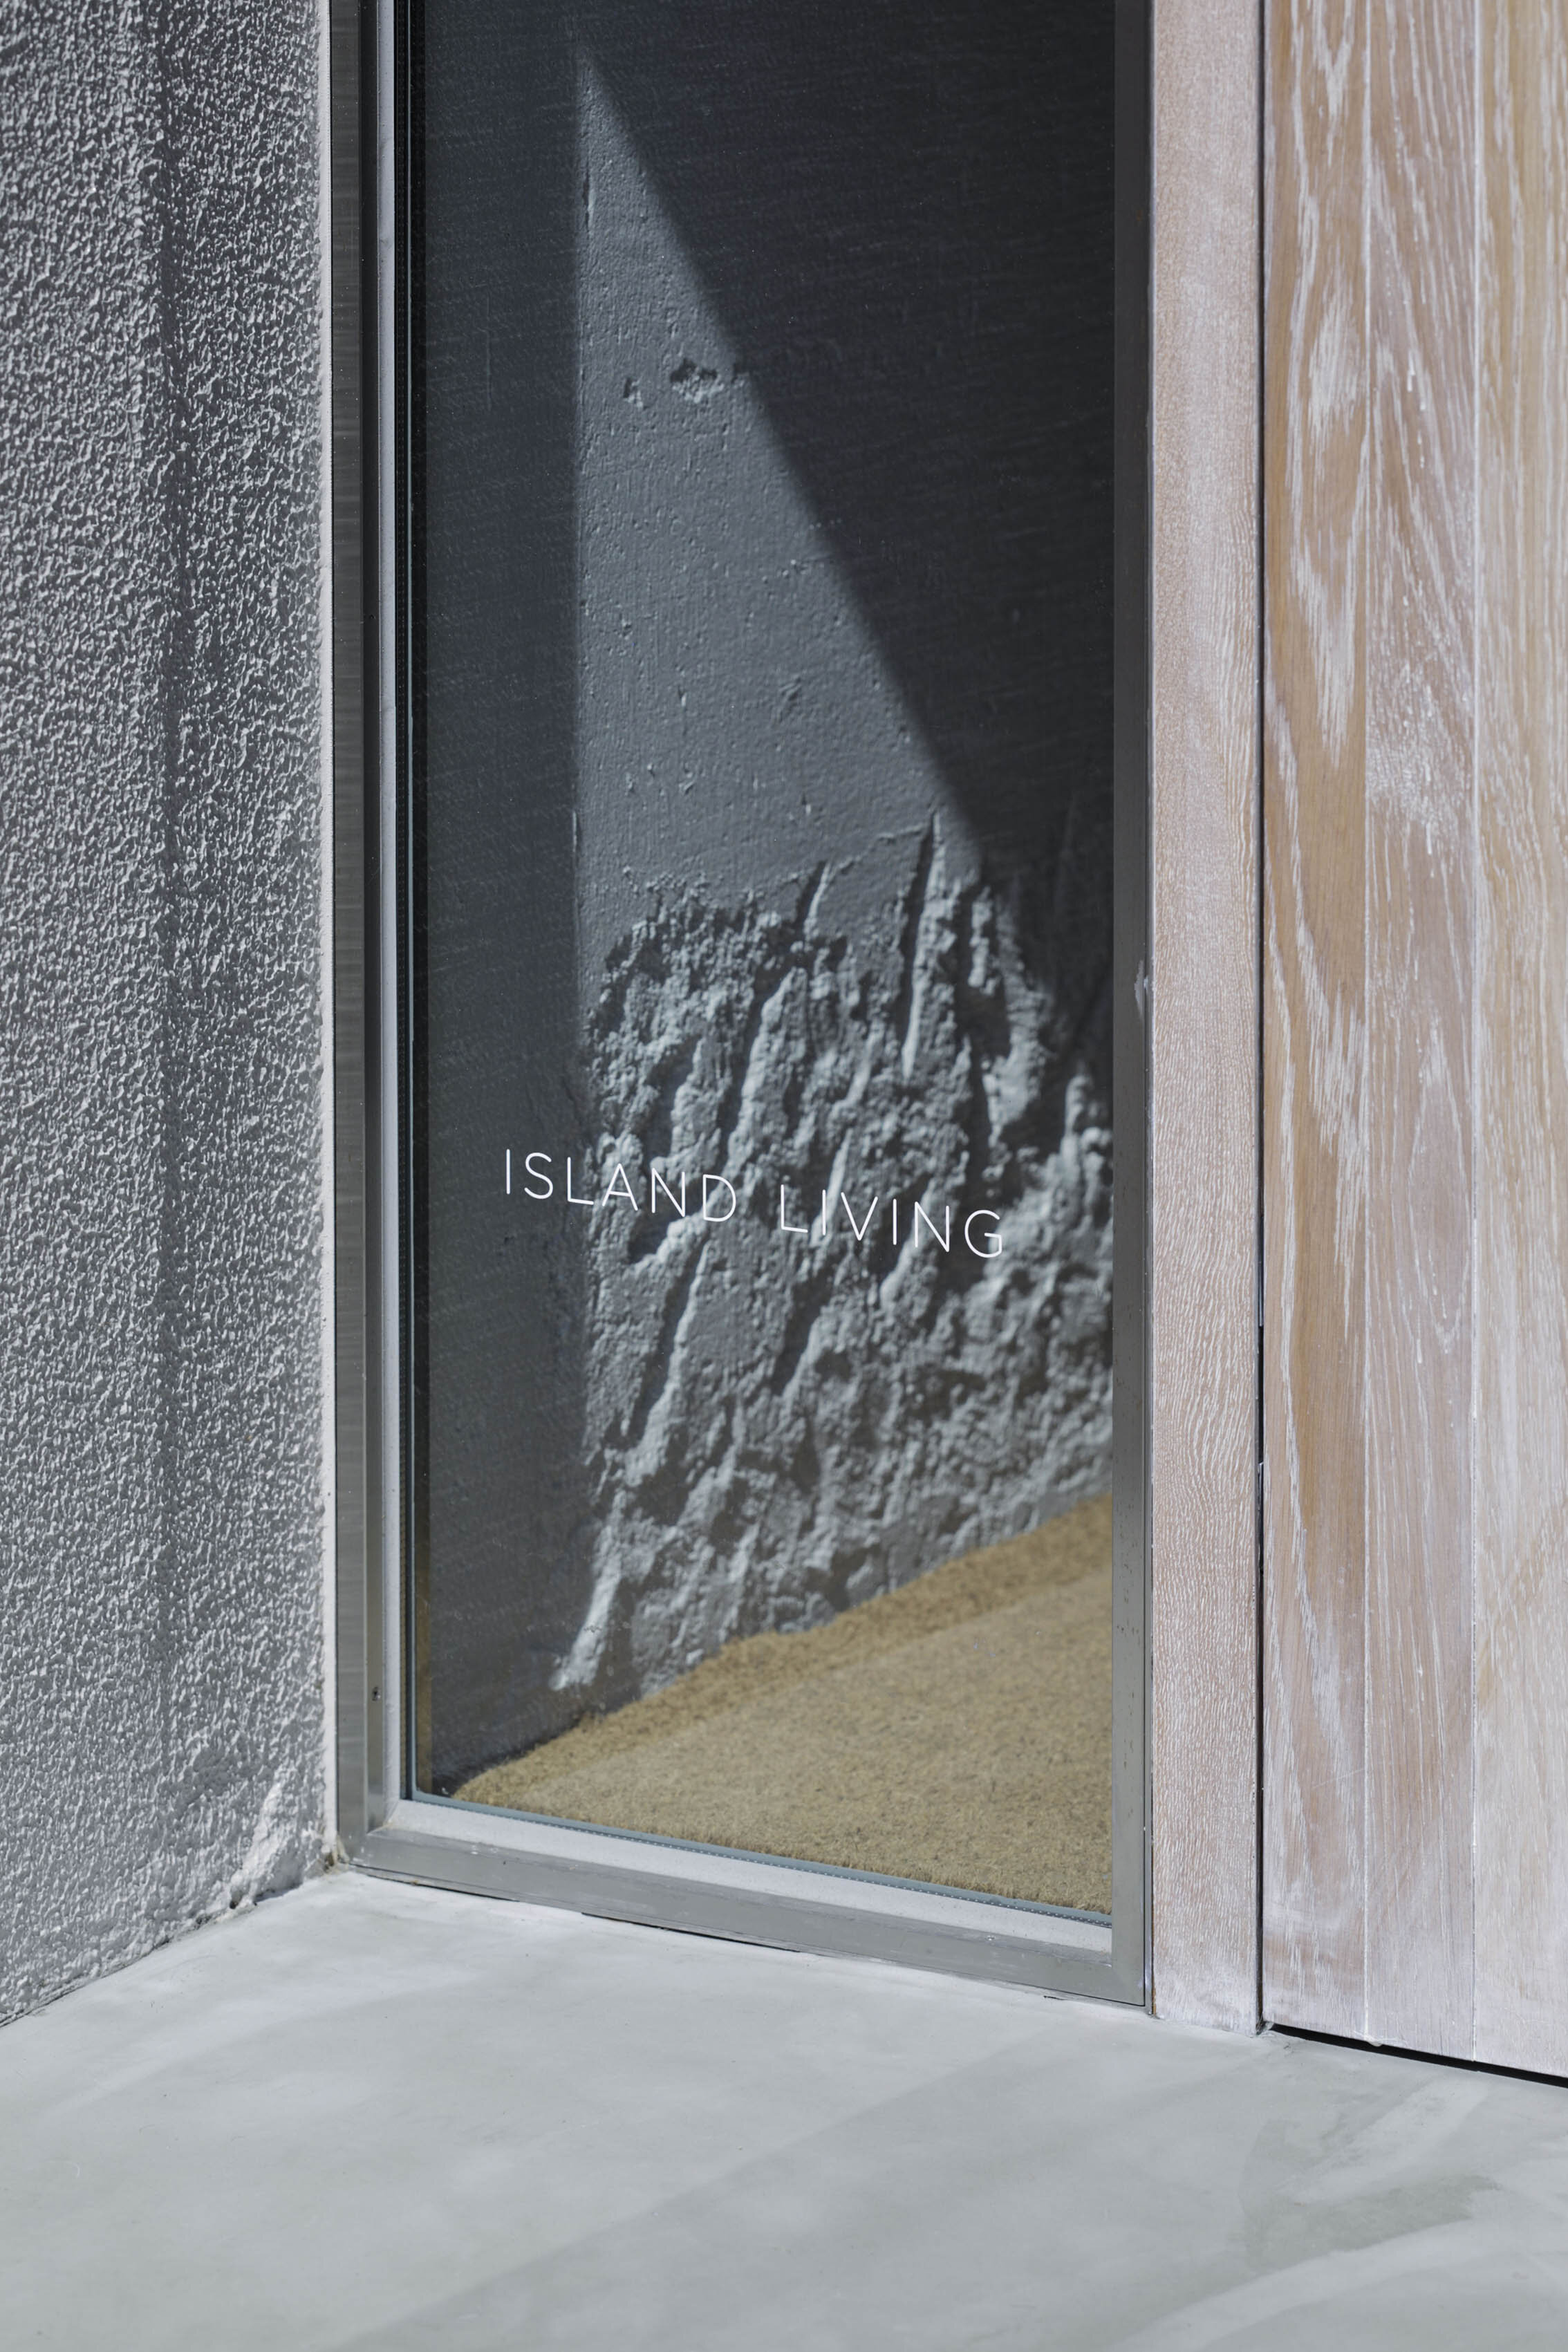  The sign of ISLAND LIVING designed by Hiroyuki Ogura/DRAWERS. 